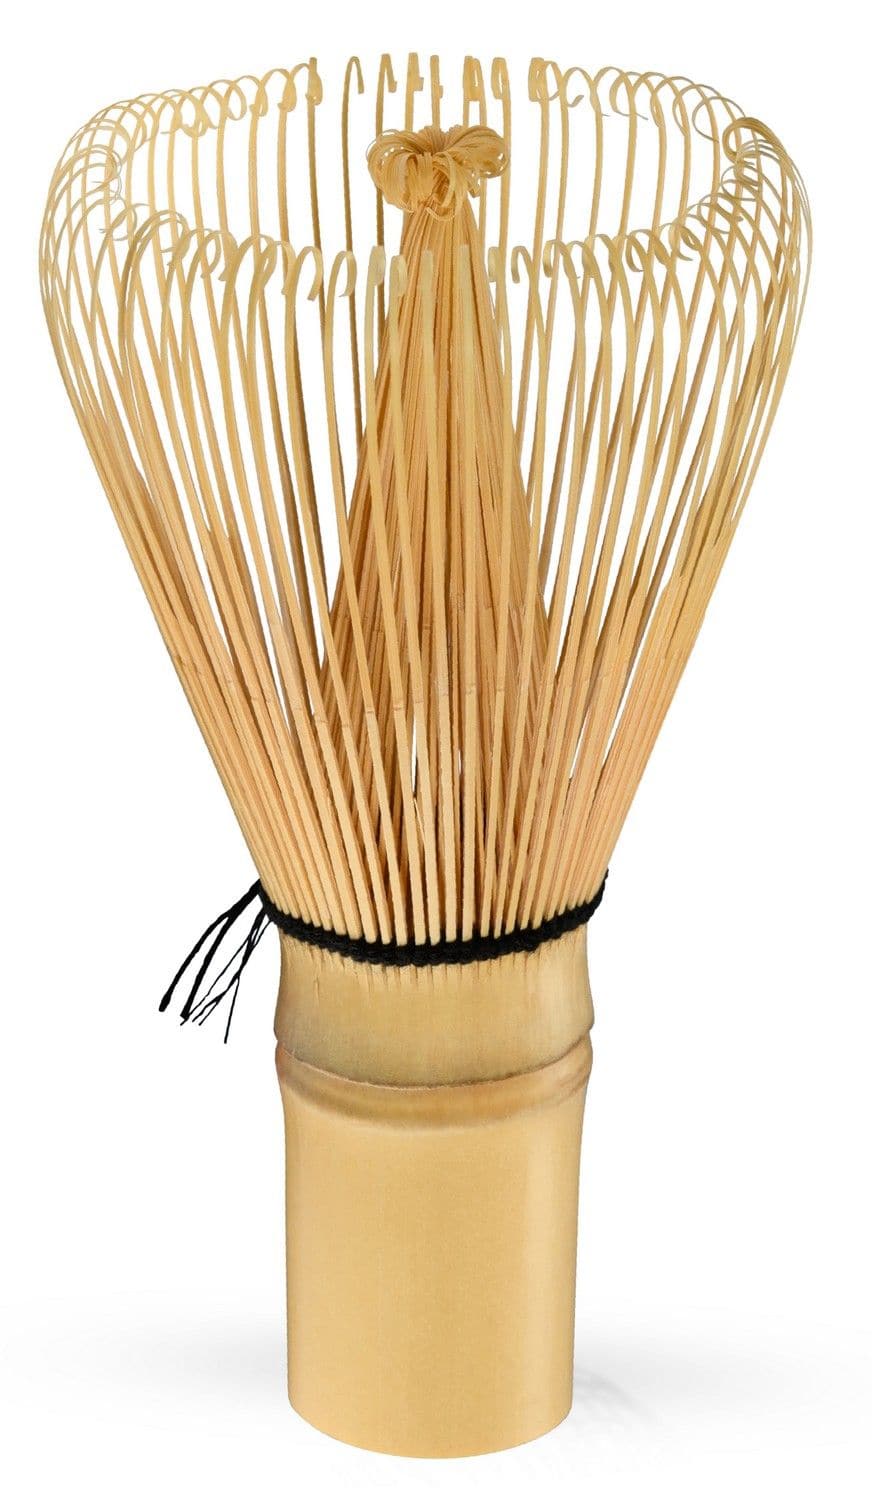 White Bamboo Matcha Whisk (Chasen)